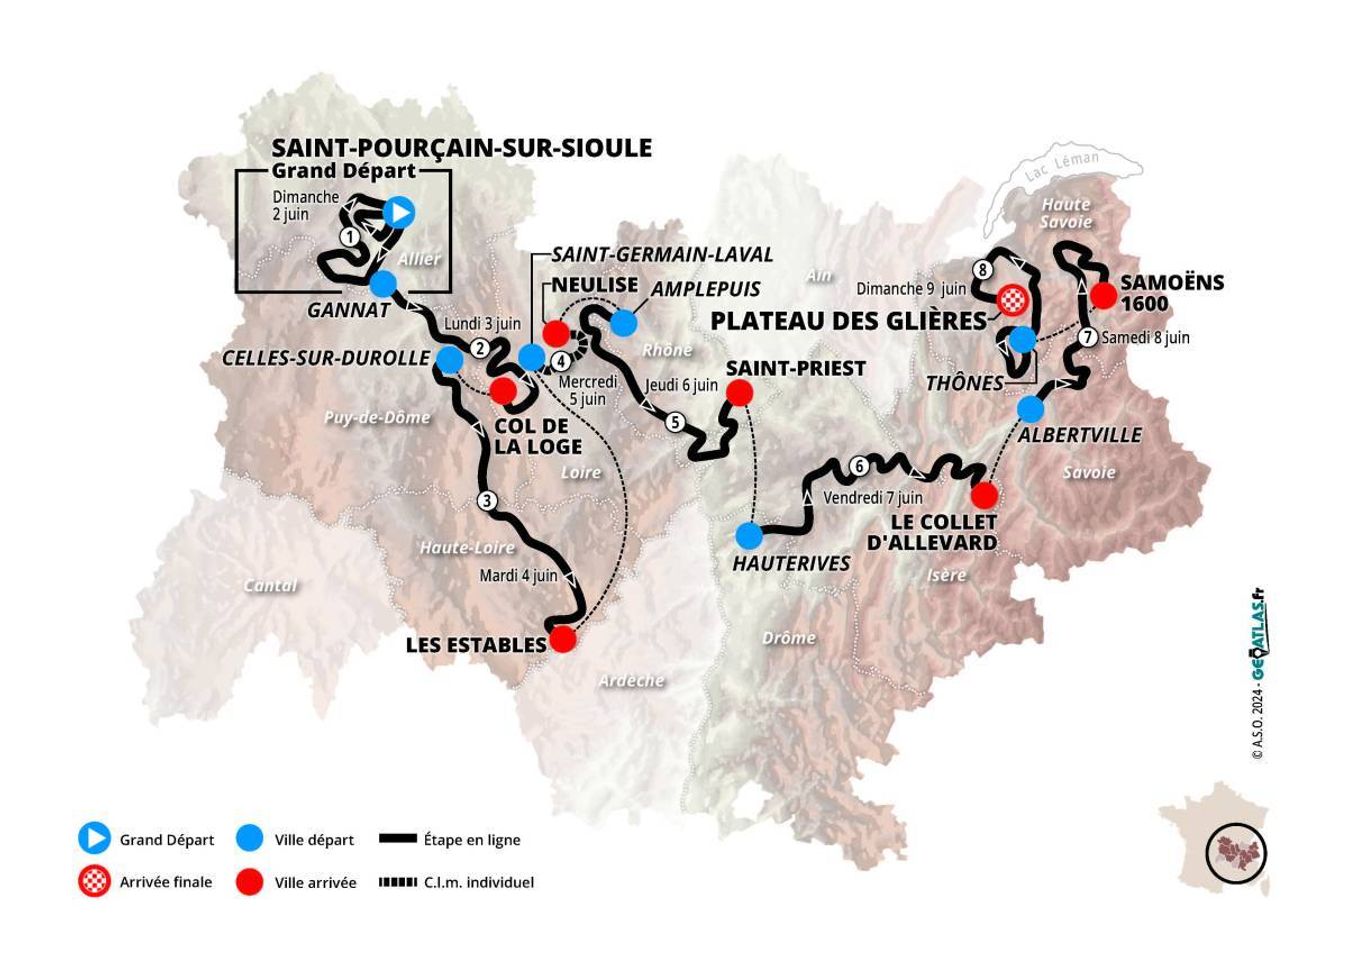 An overview of this year's Critérium du Dauphiné route